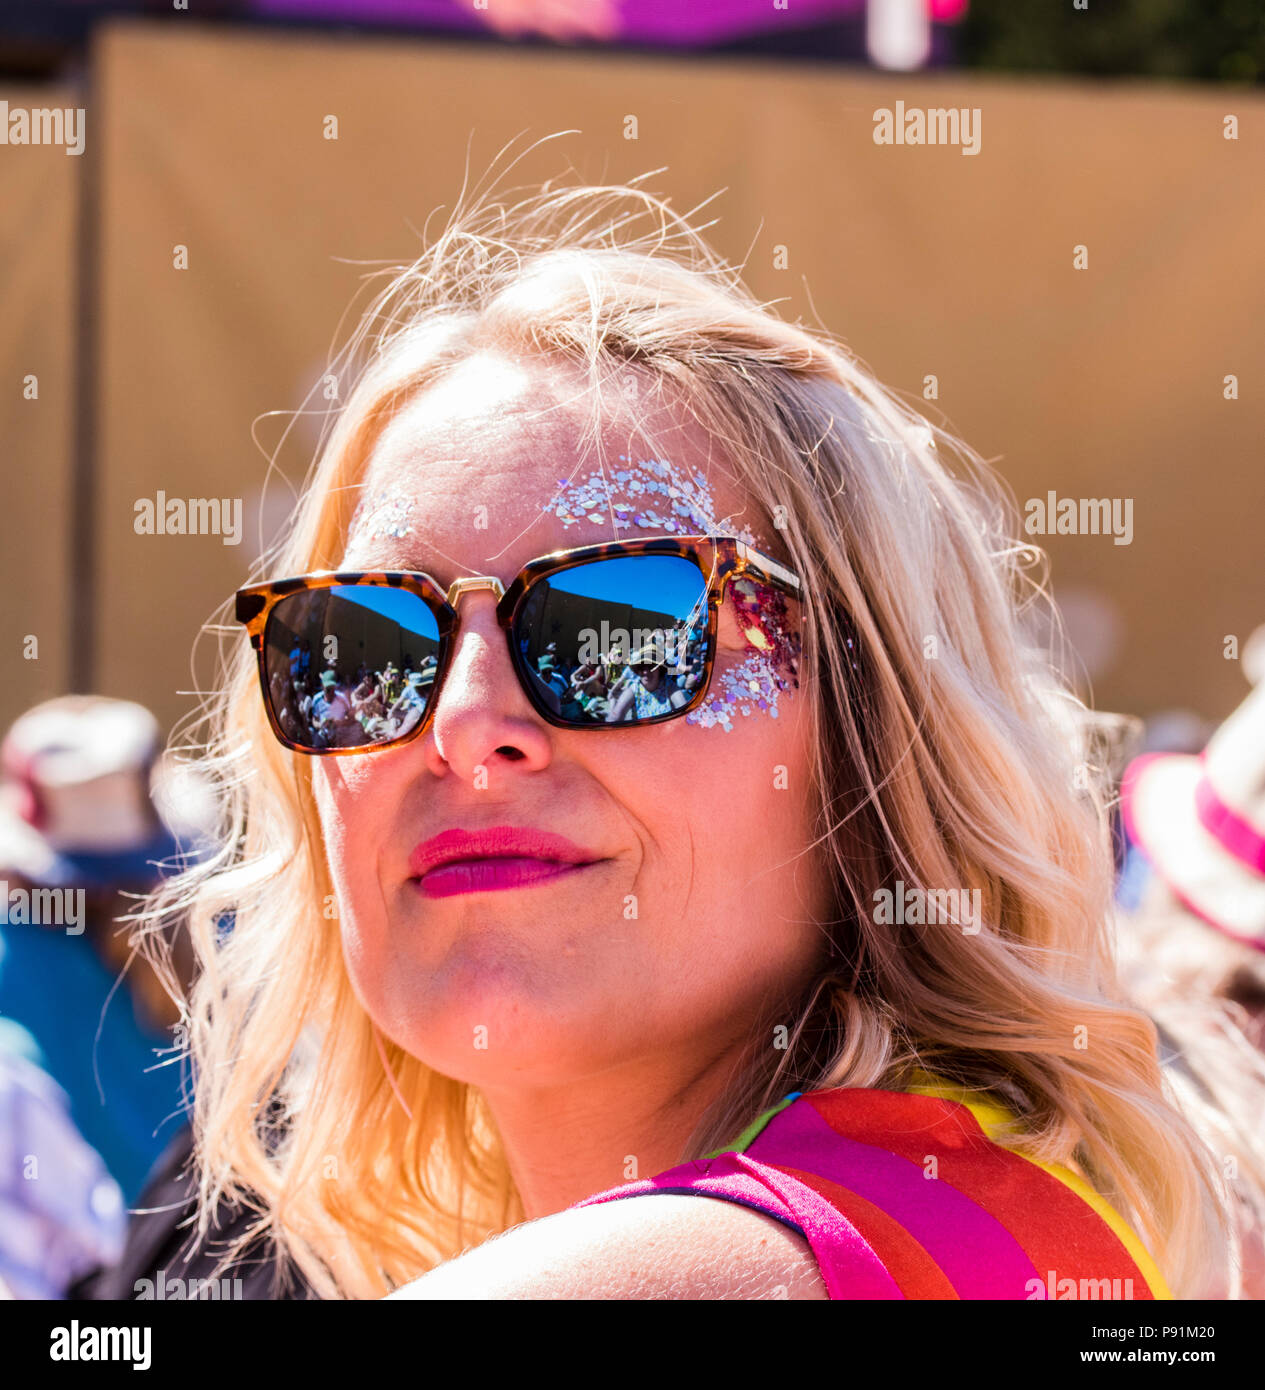 portrait of female festival goer, wearing sunglasses, with fellow festival goers reflected in sunglasses, at Latitude Festival, Henham Park, Suffolk, England, 14th July, 2018 Stock Photo